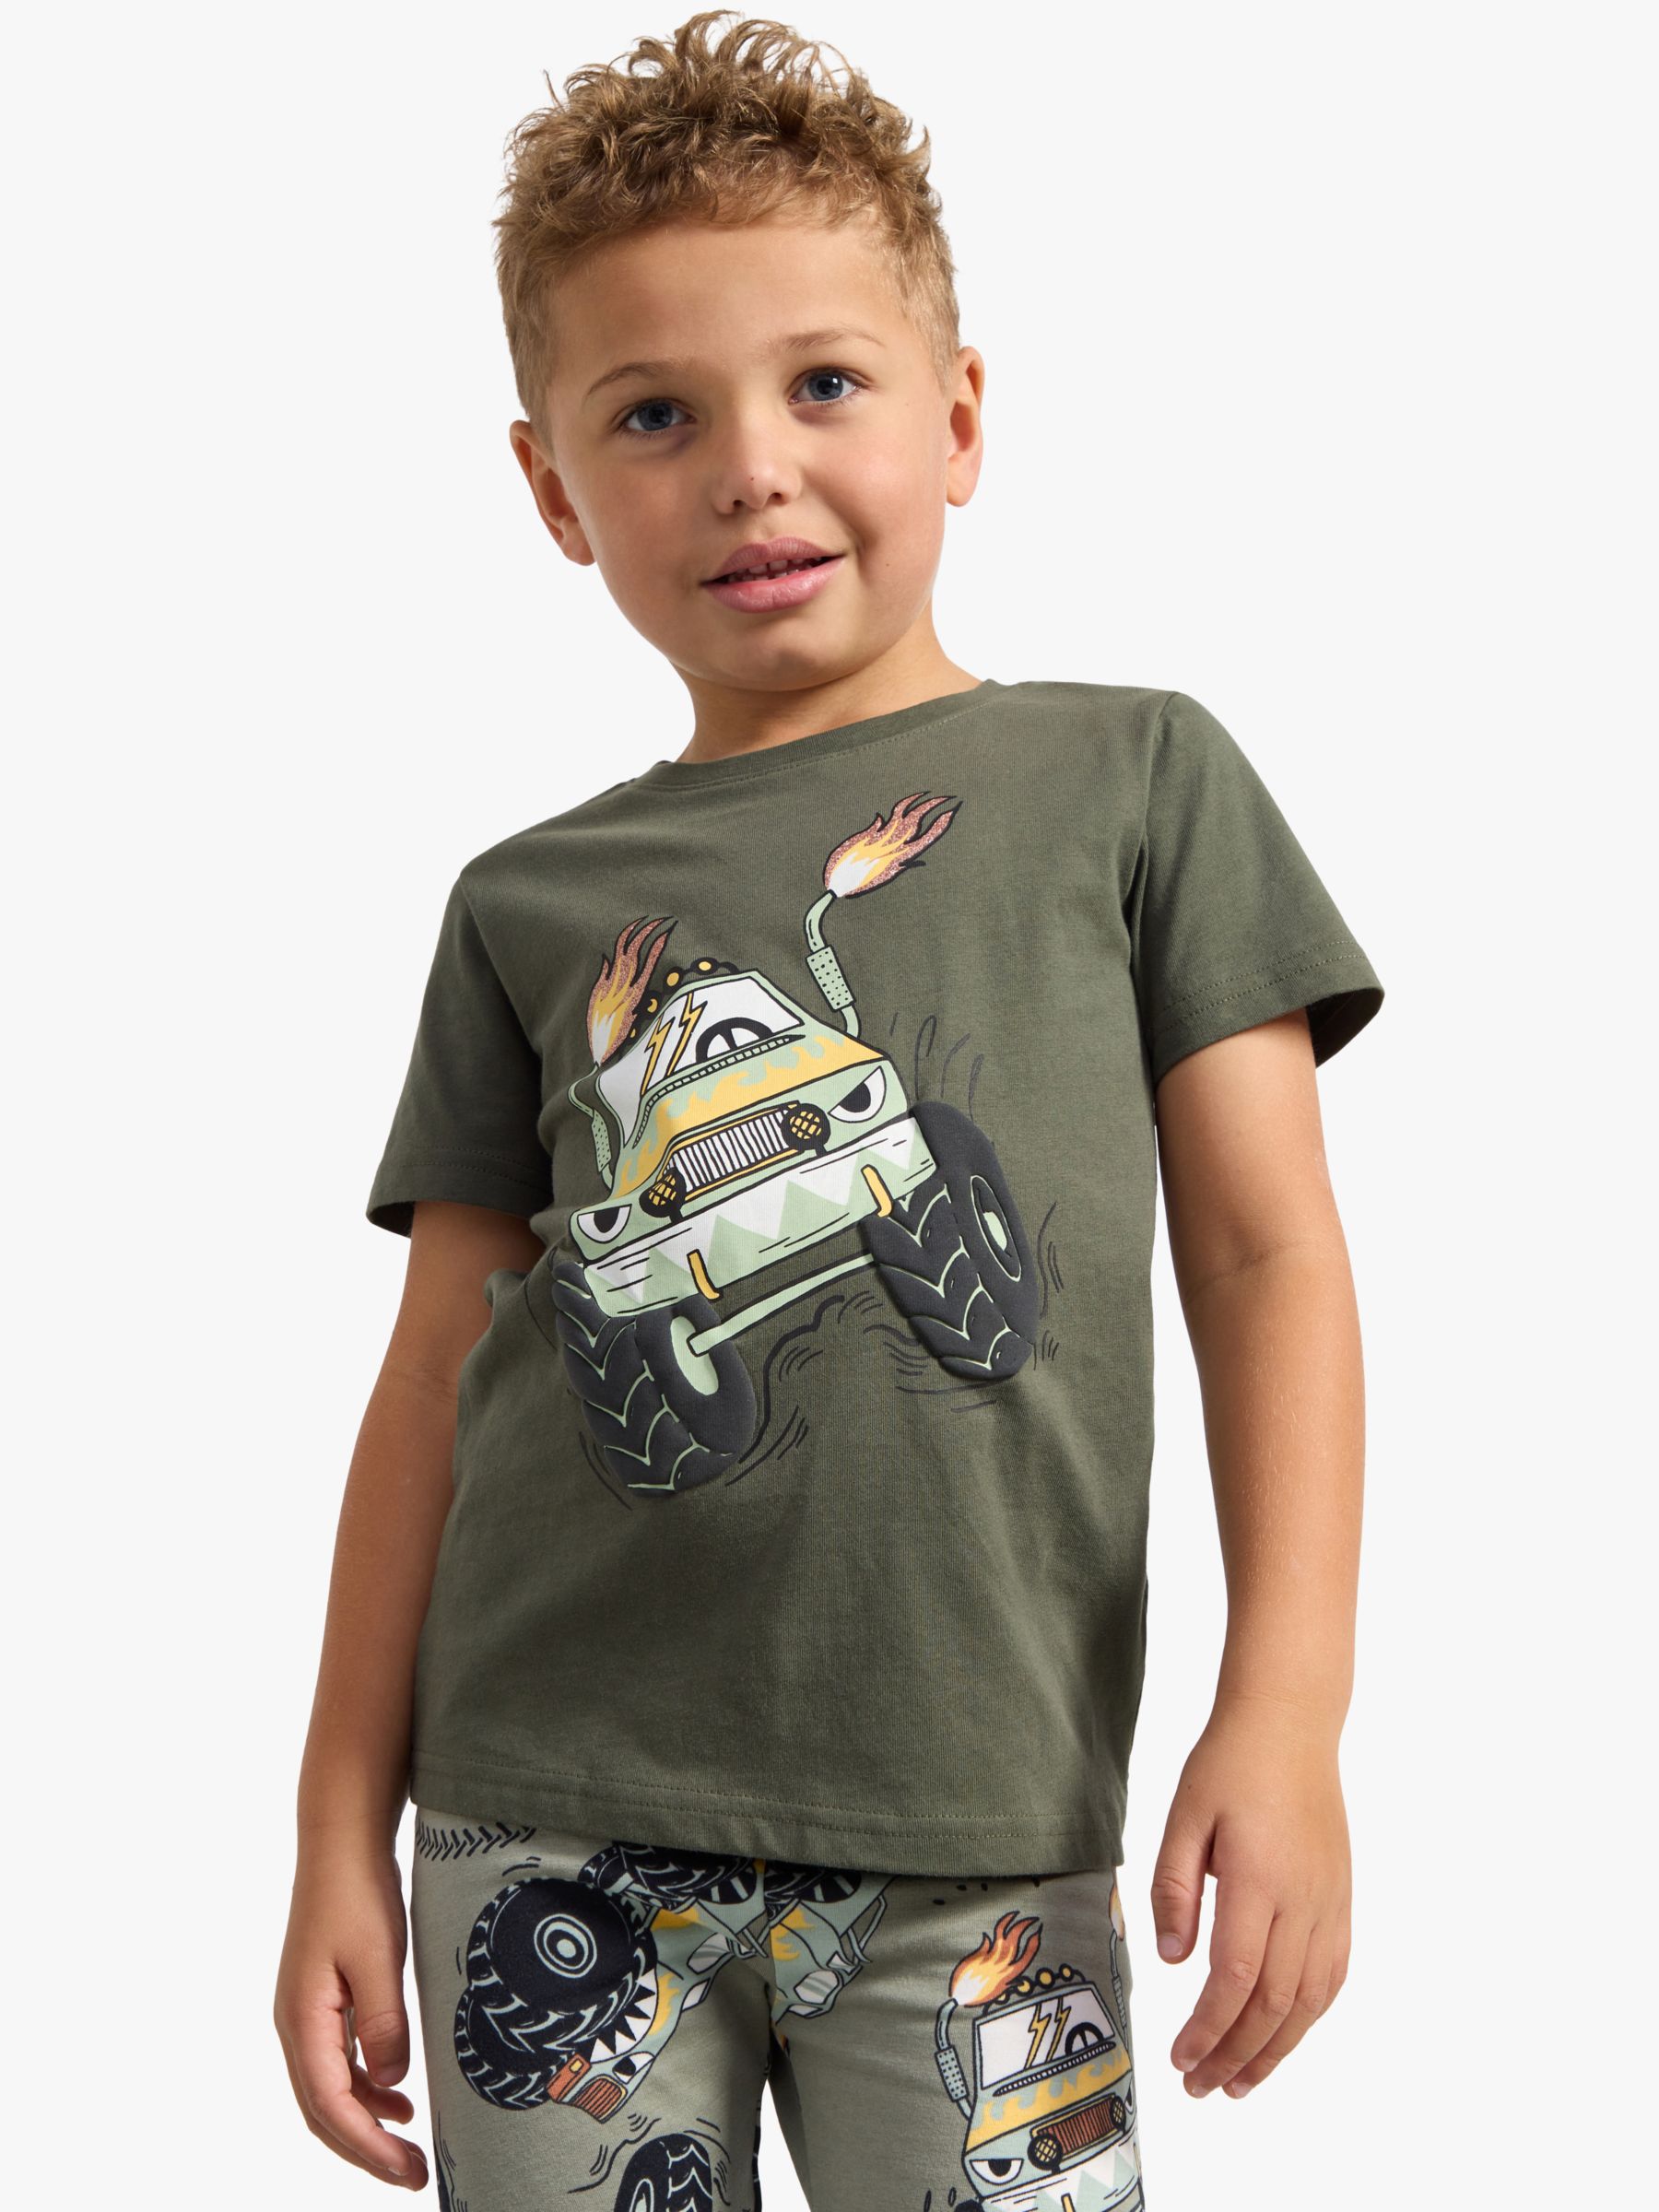 Lindex Kids' Monster Truck Short Sleeve Top, Dark Dusty Khaki, 18-24 months